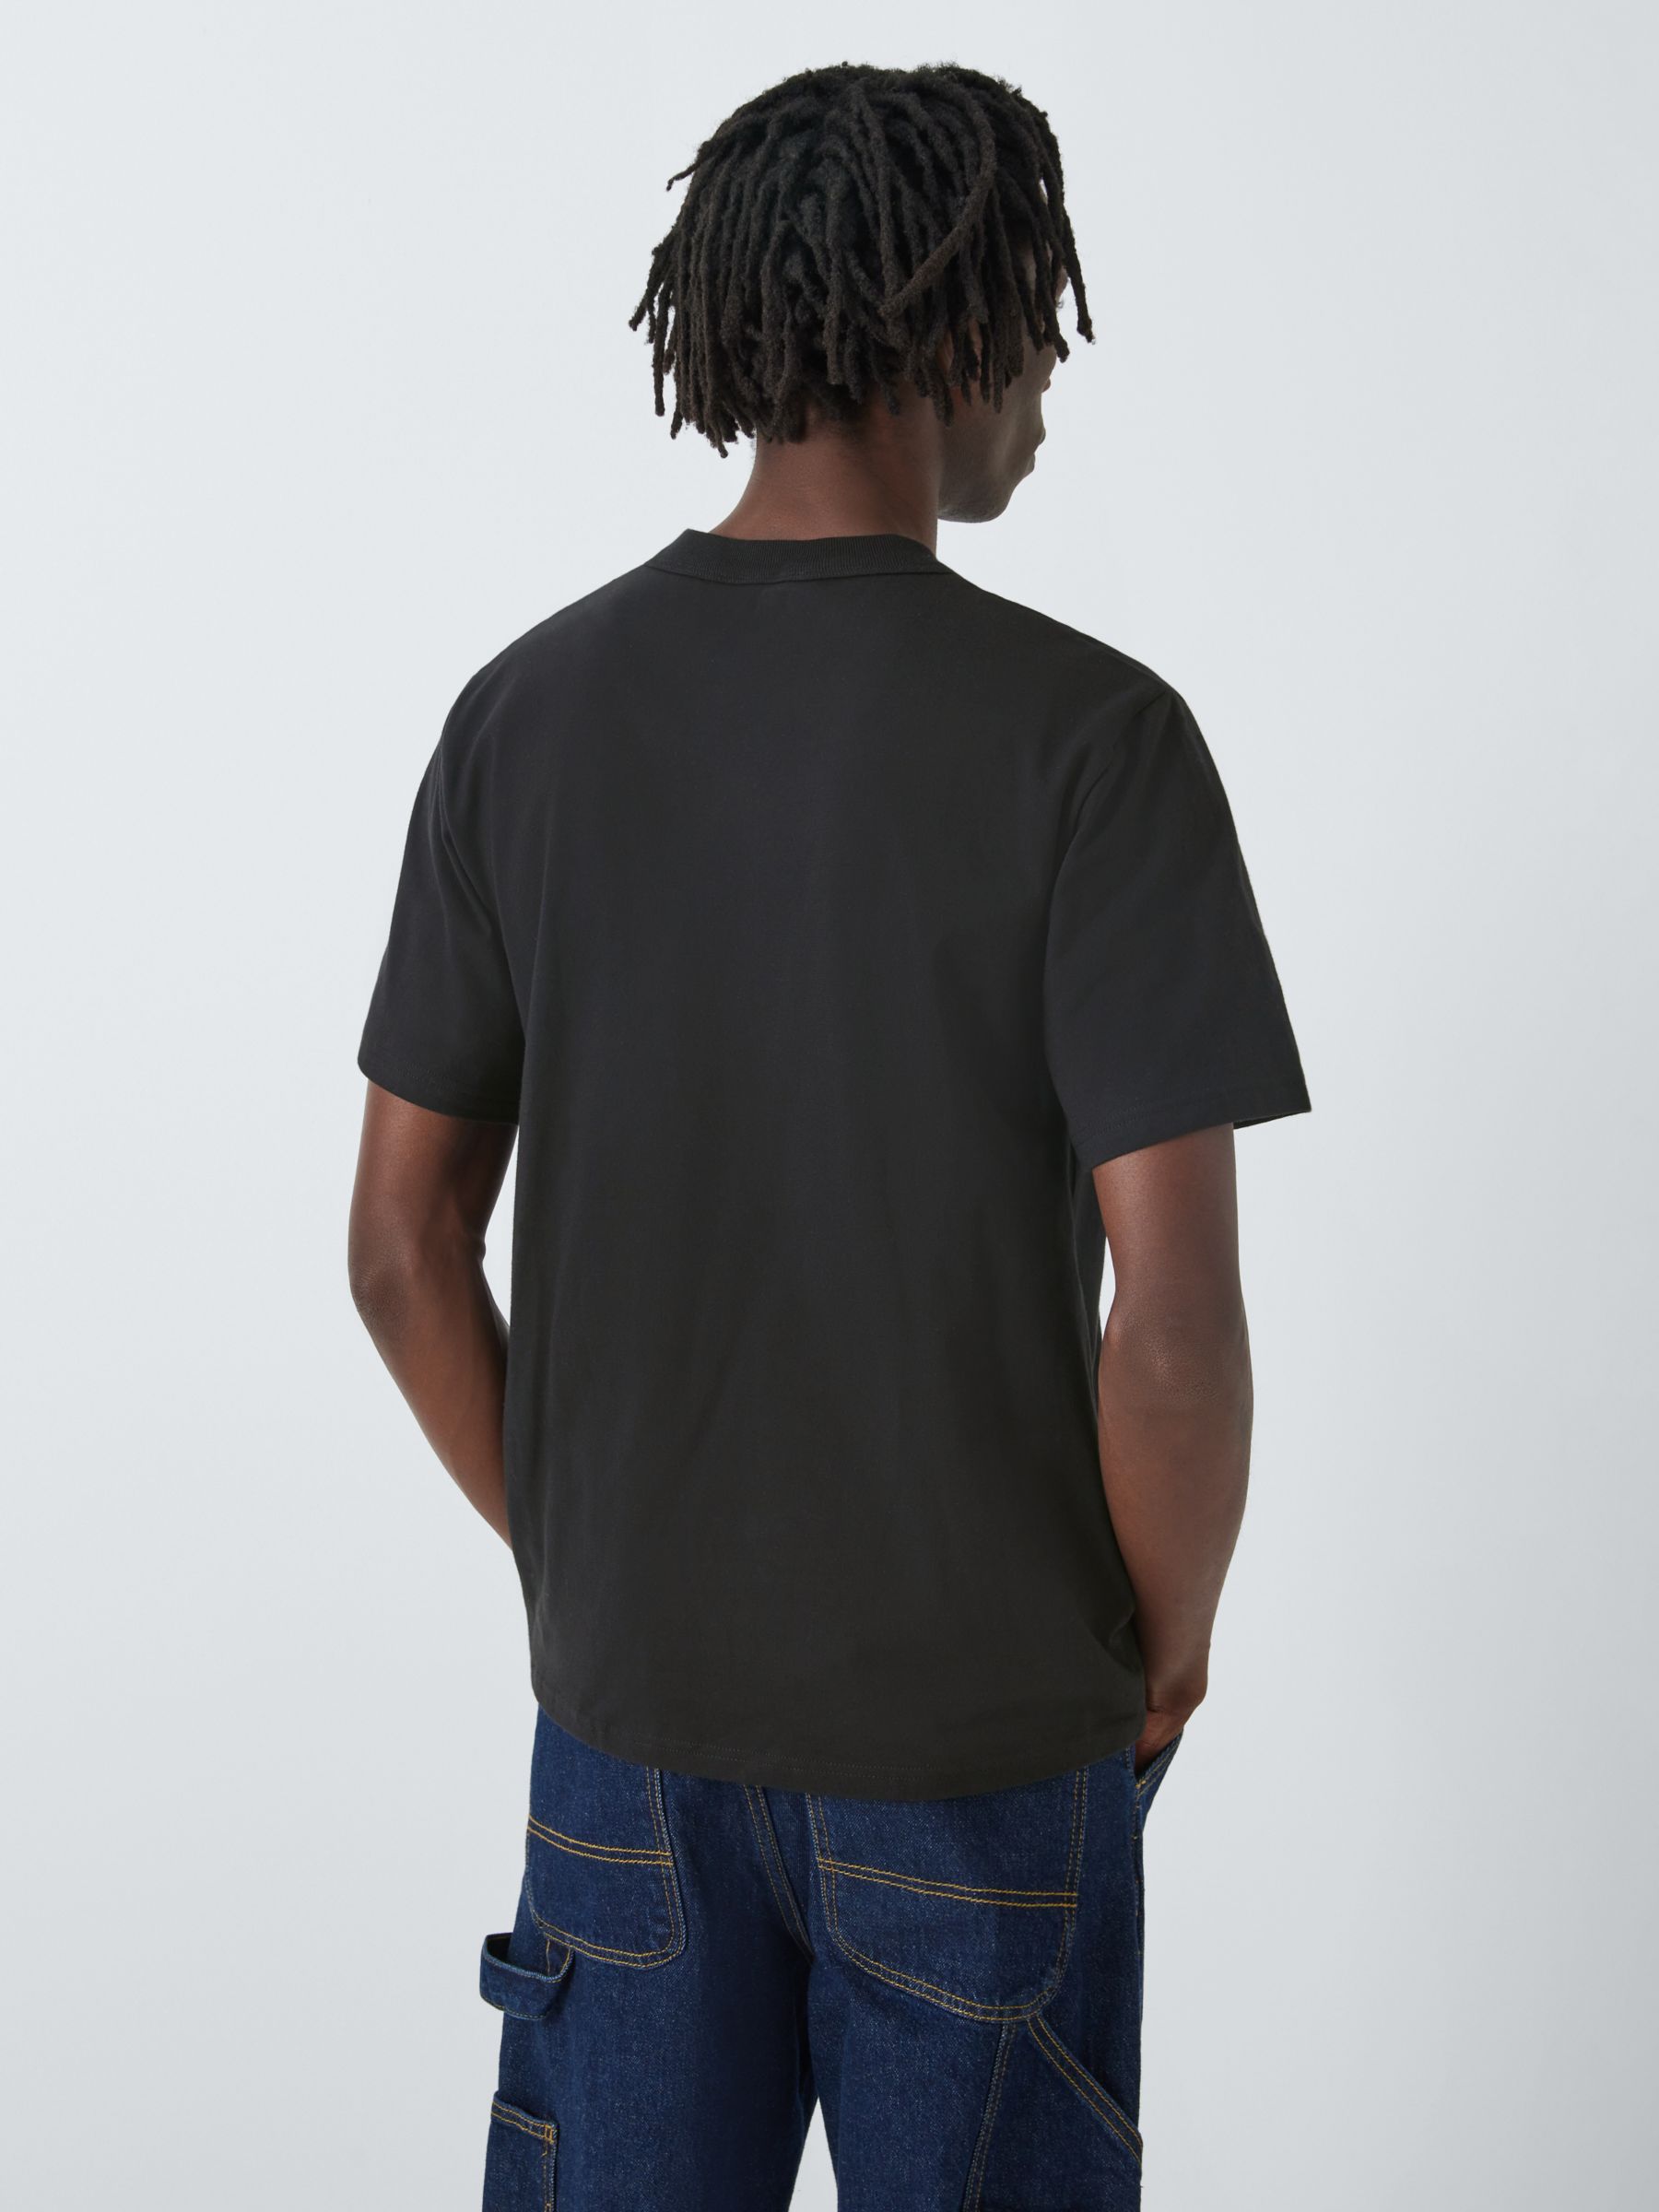 Buy Armor Lux Pocket Cotton T-Shirt, Black Online at johnlewis.com